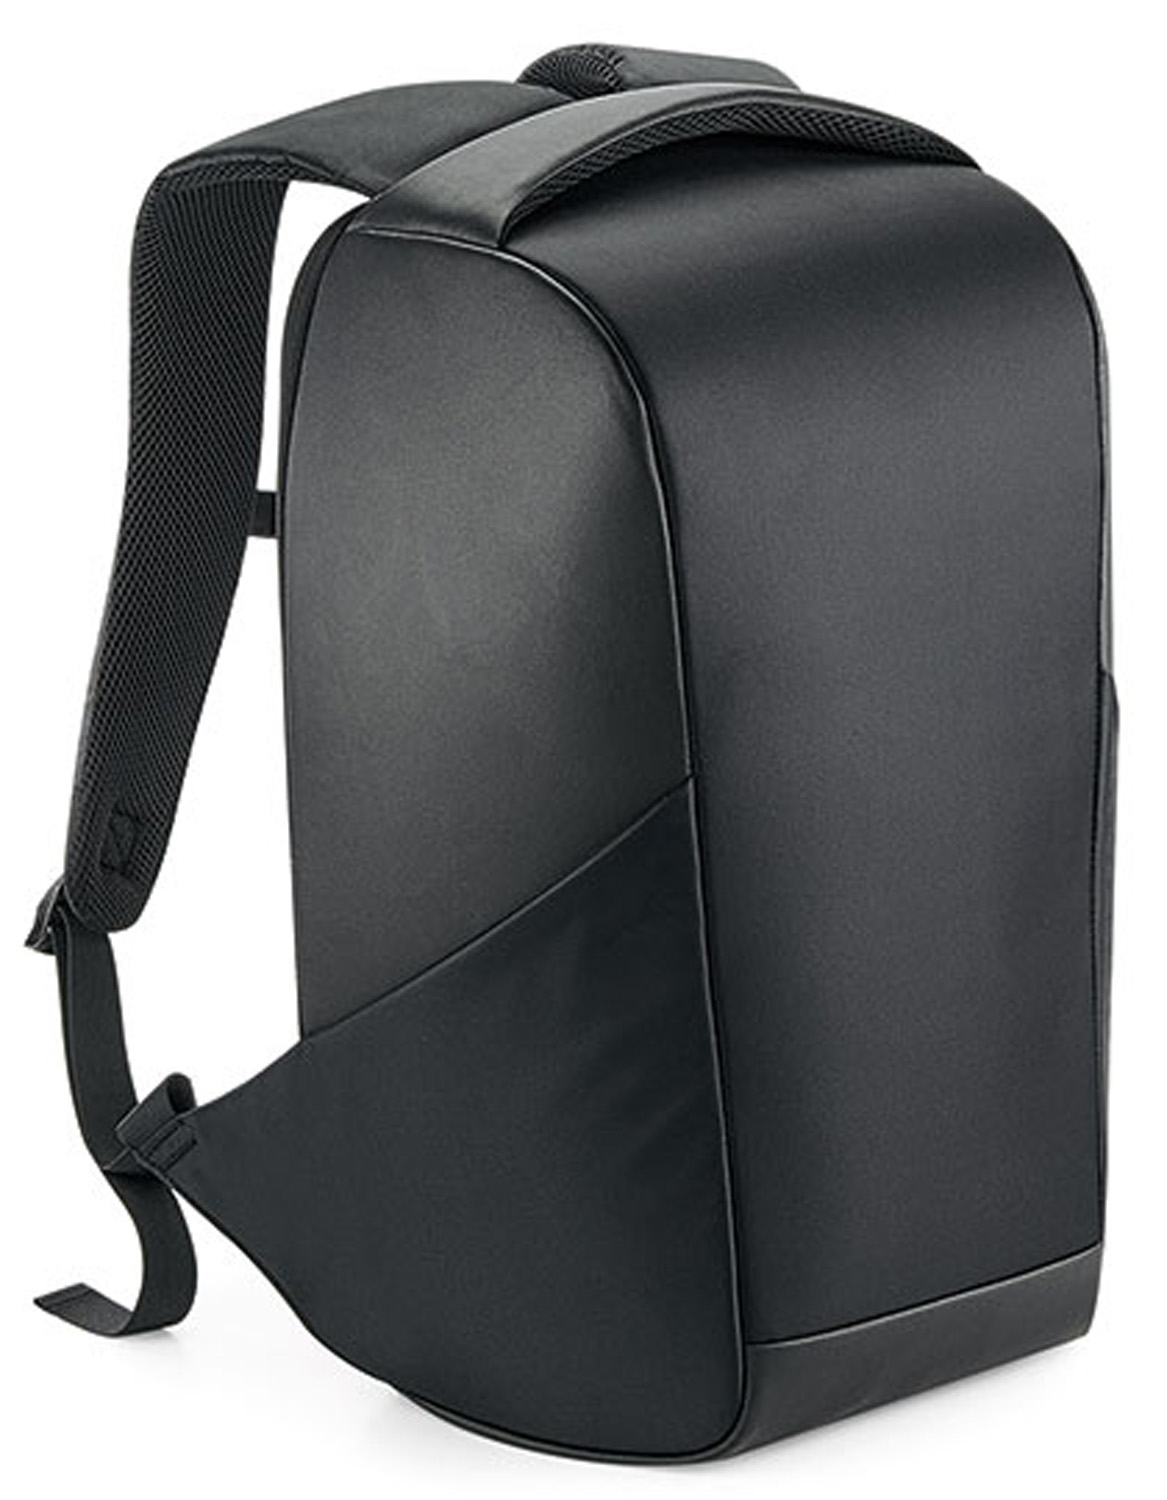 Rucksack Quadra Project Charge Security Backpack XL QD926 Black